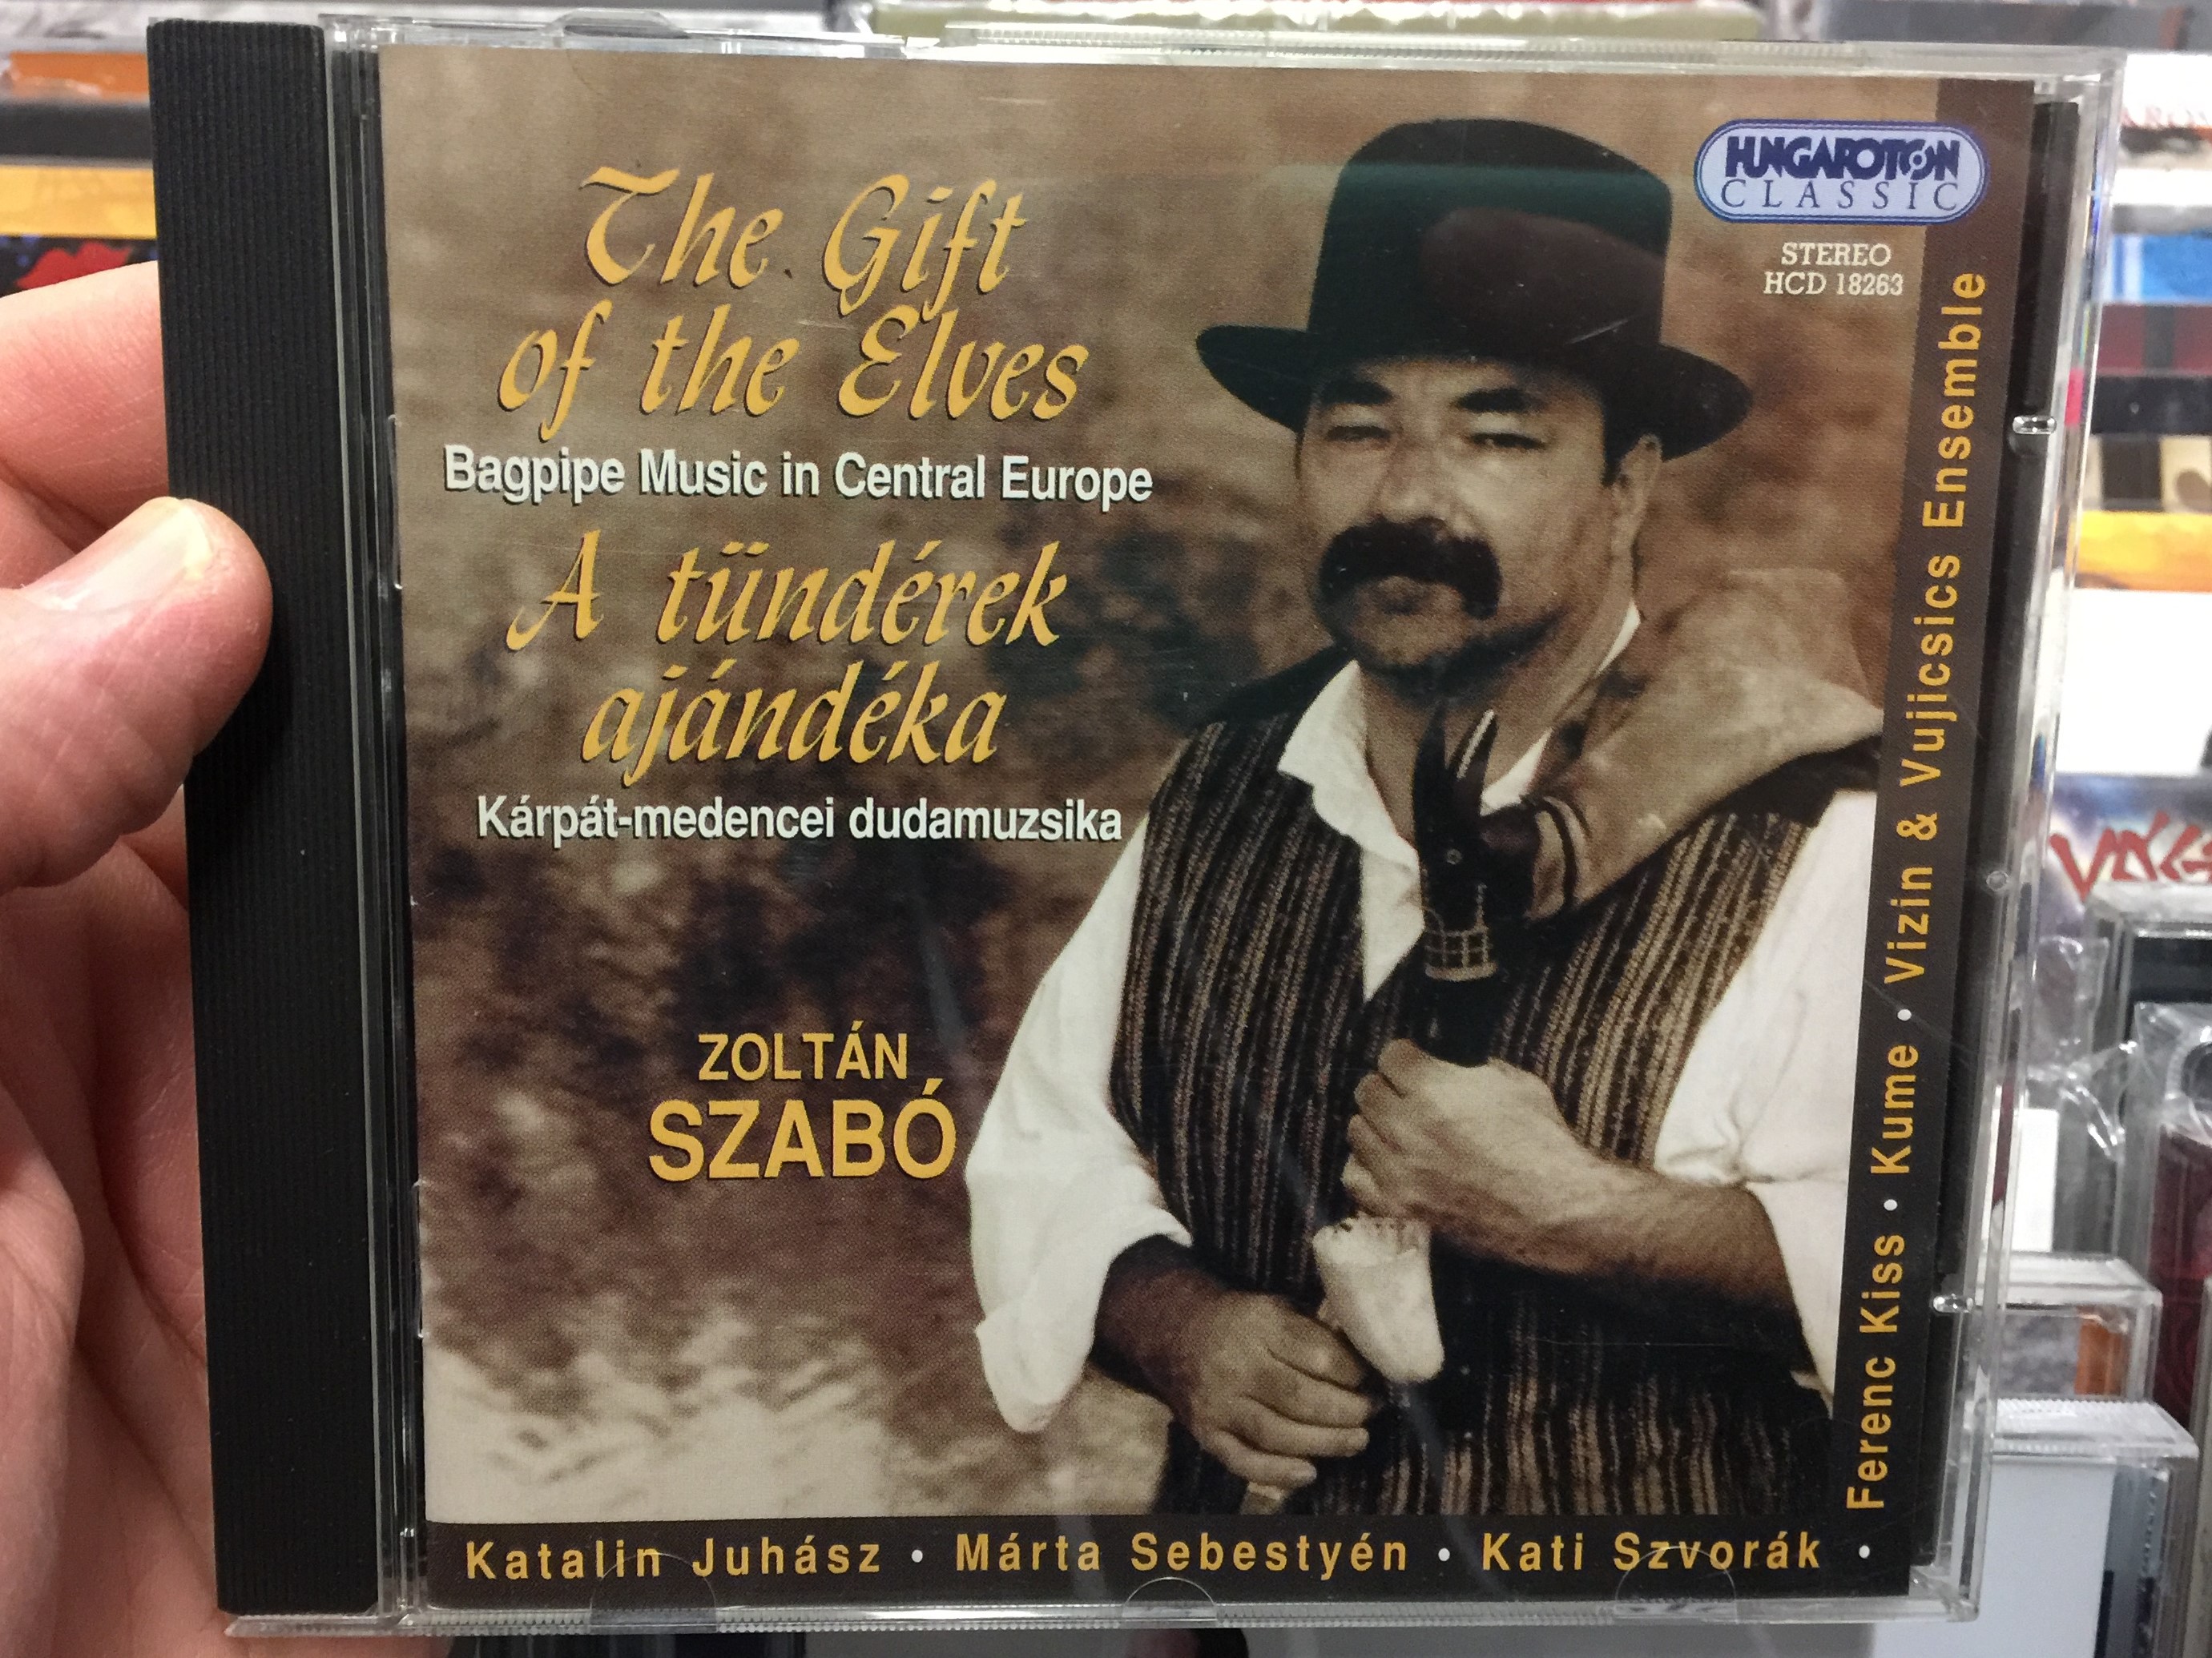 the-gift-of-the-elves-bagpipe-music-in-central-europe-a-tunderek-ajandeka-karpat-medencei-dudamuzsika-zoltan-szabo-katalin-juhasz-marta-sebestyen-kati-szvorak-hungaroton-classic-audio-cd-1-.jpg